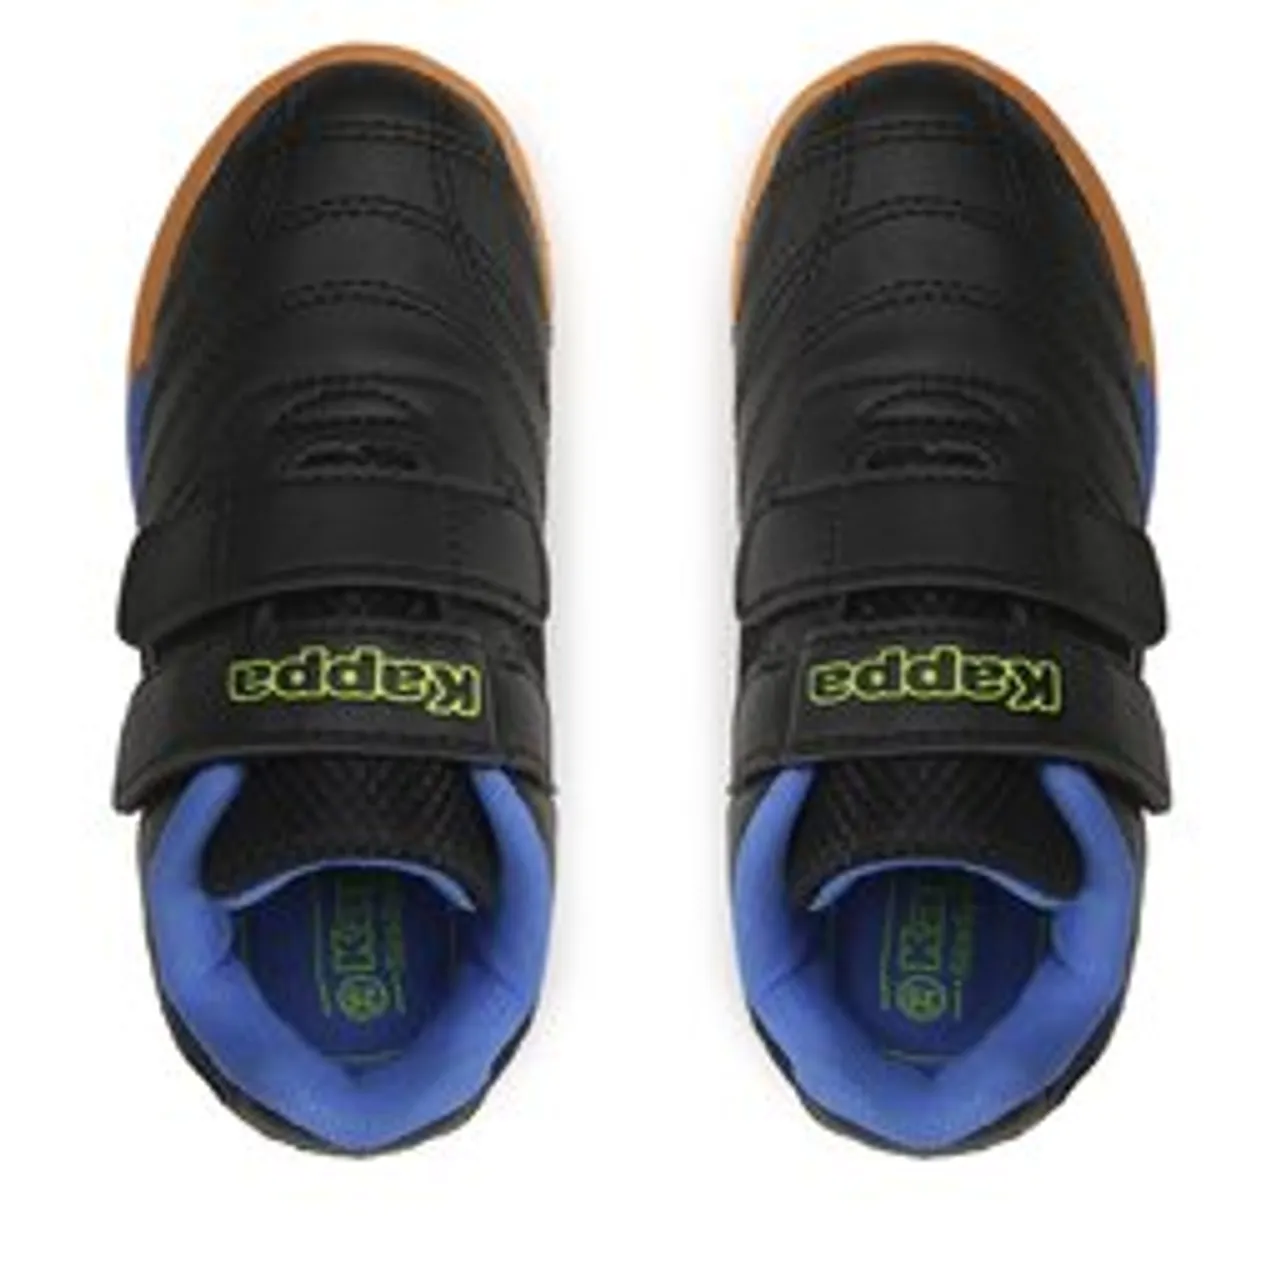 Kappa Sneakers 260509BCK Black/Blue 1160 - Preise vergleichen